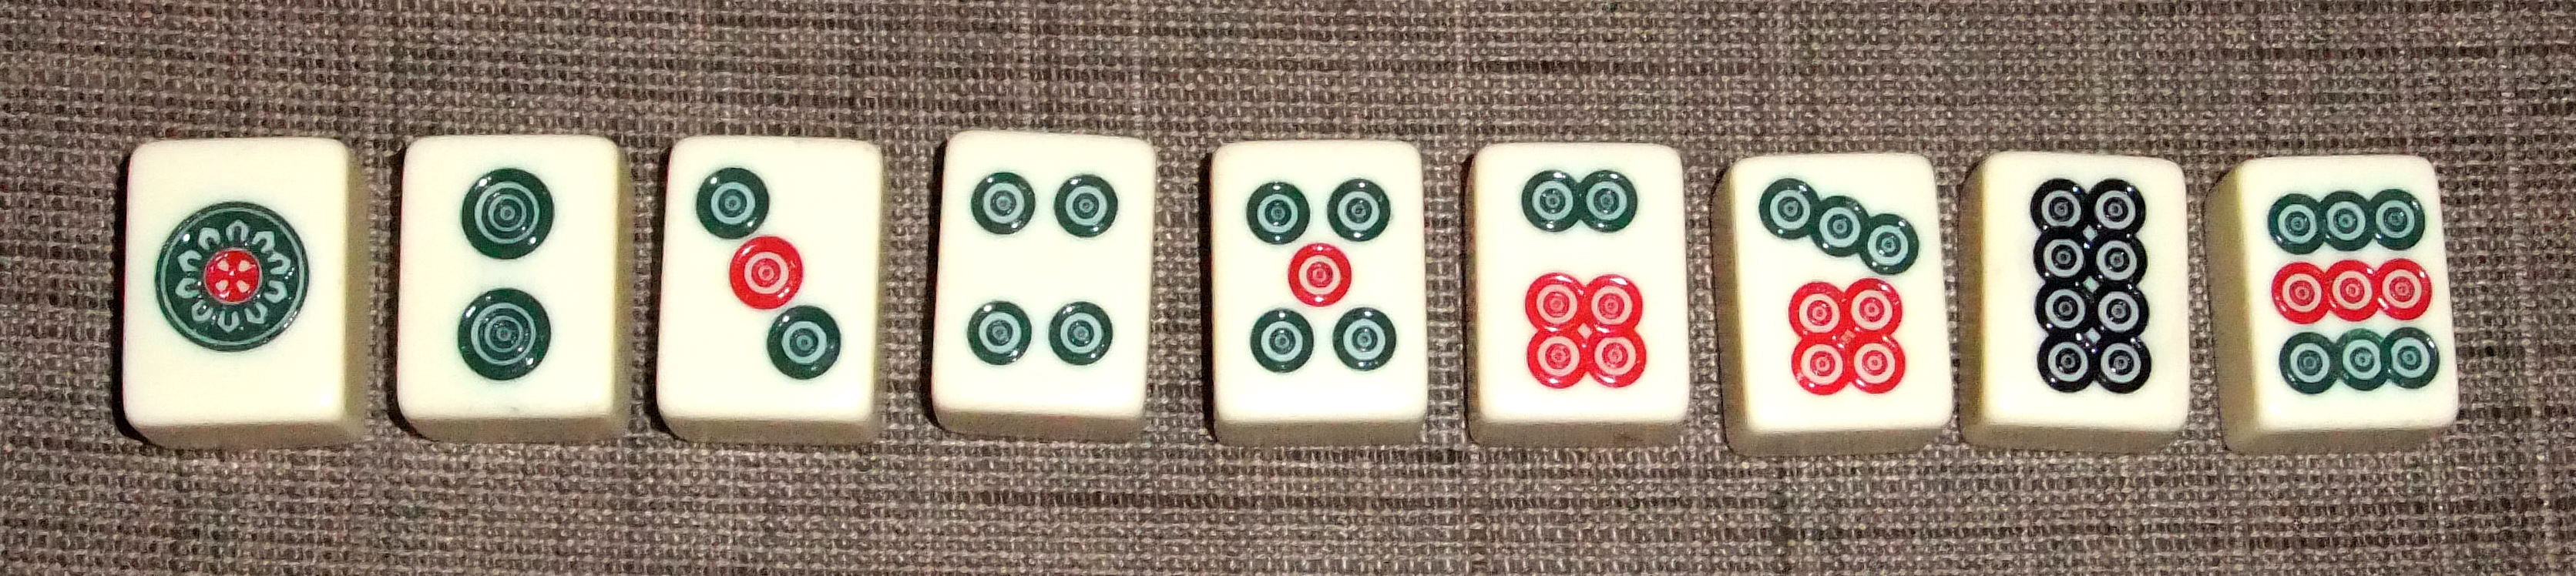 mahjong-tiles-circles.jpg